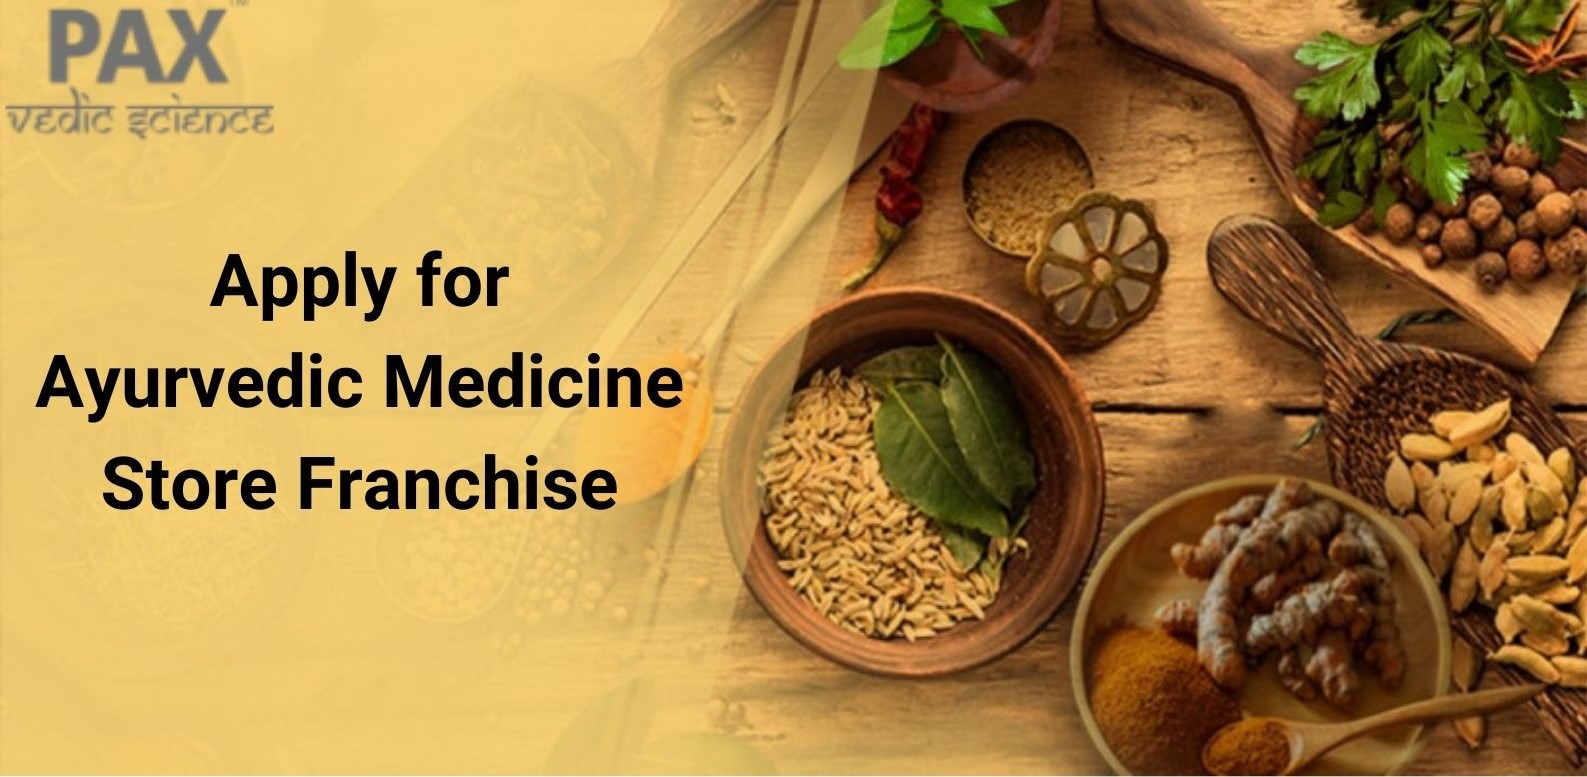 Apply for Ayurvedic Medicine Store Franchise